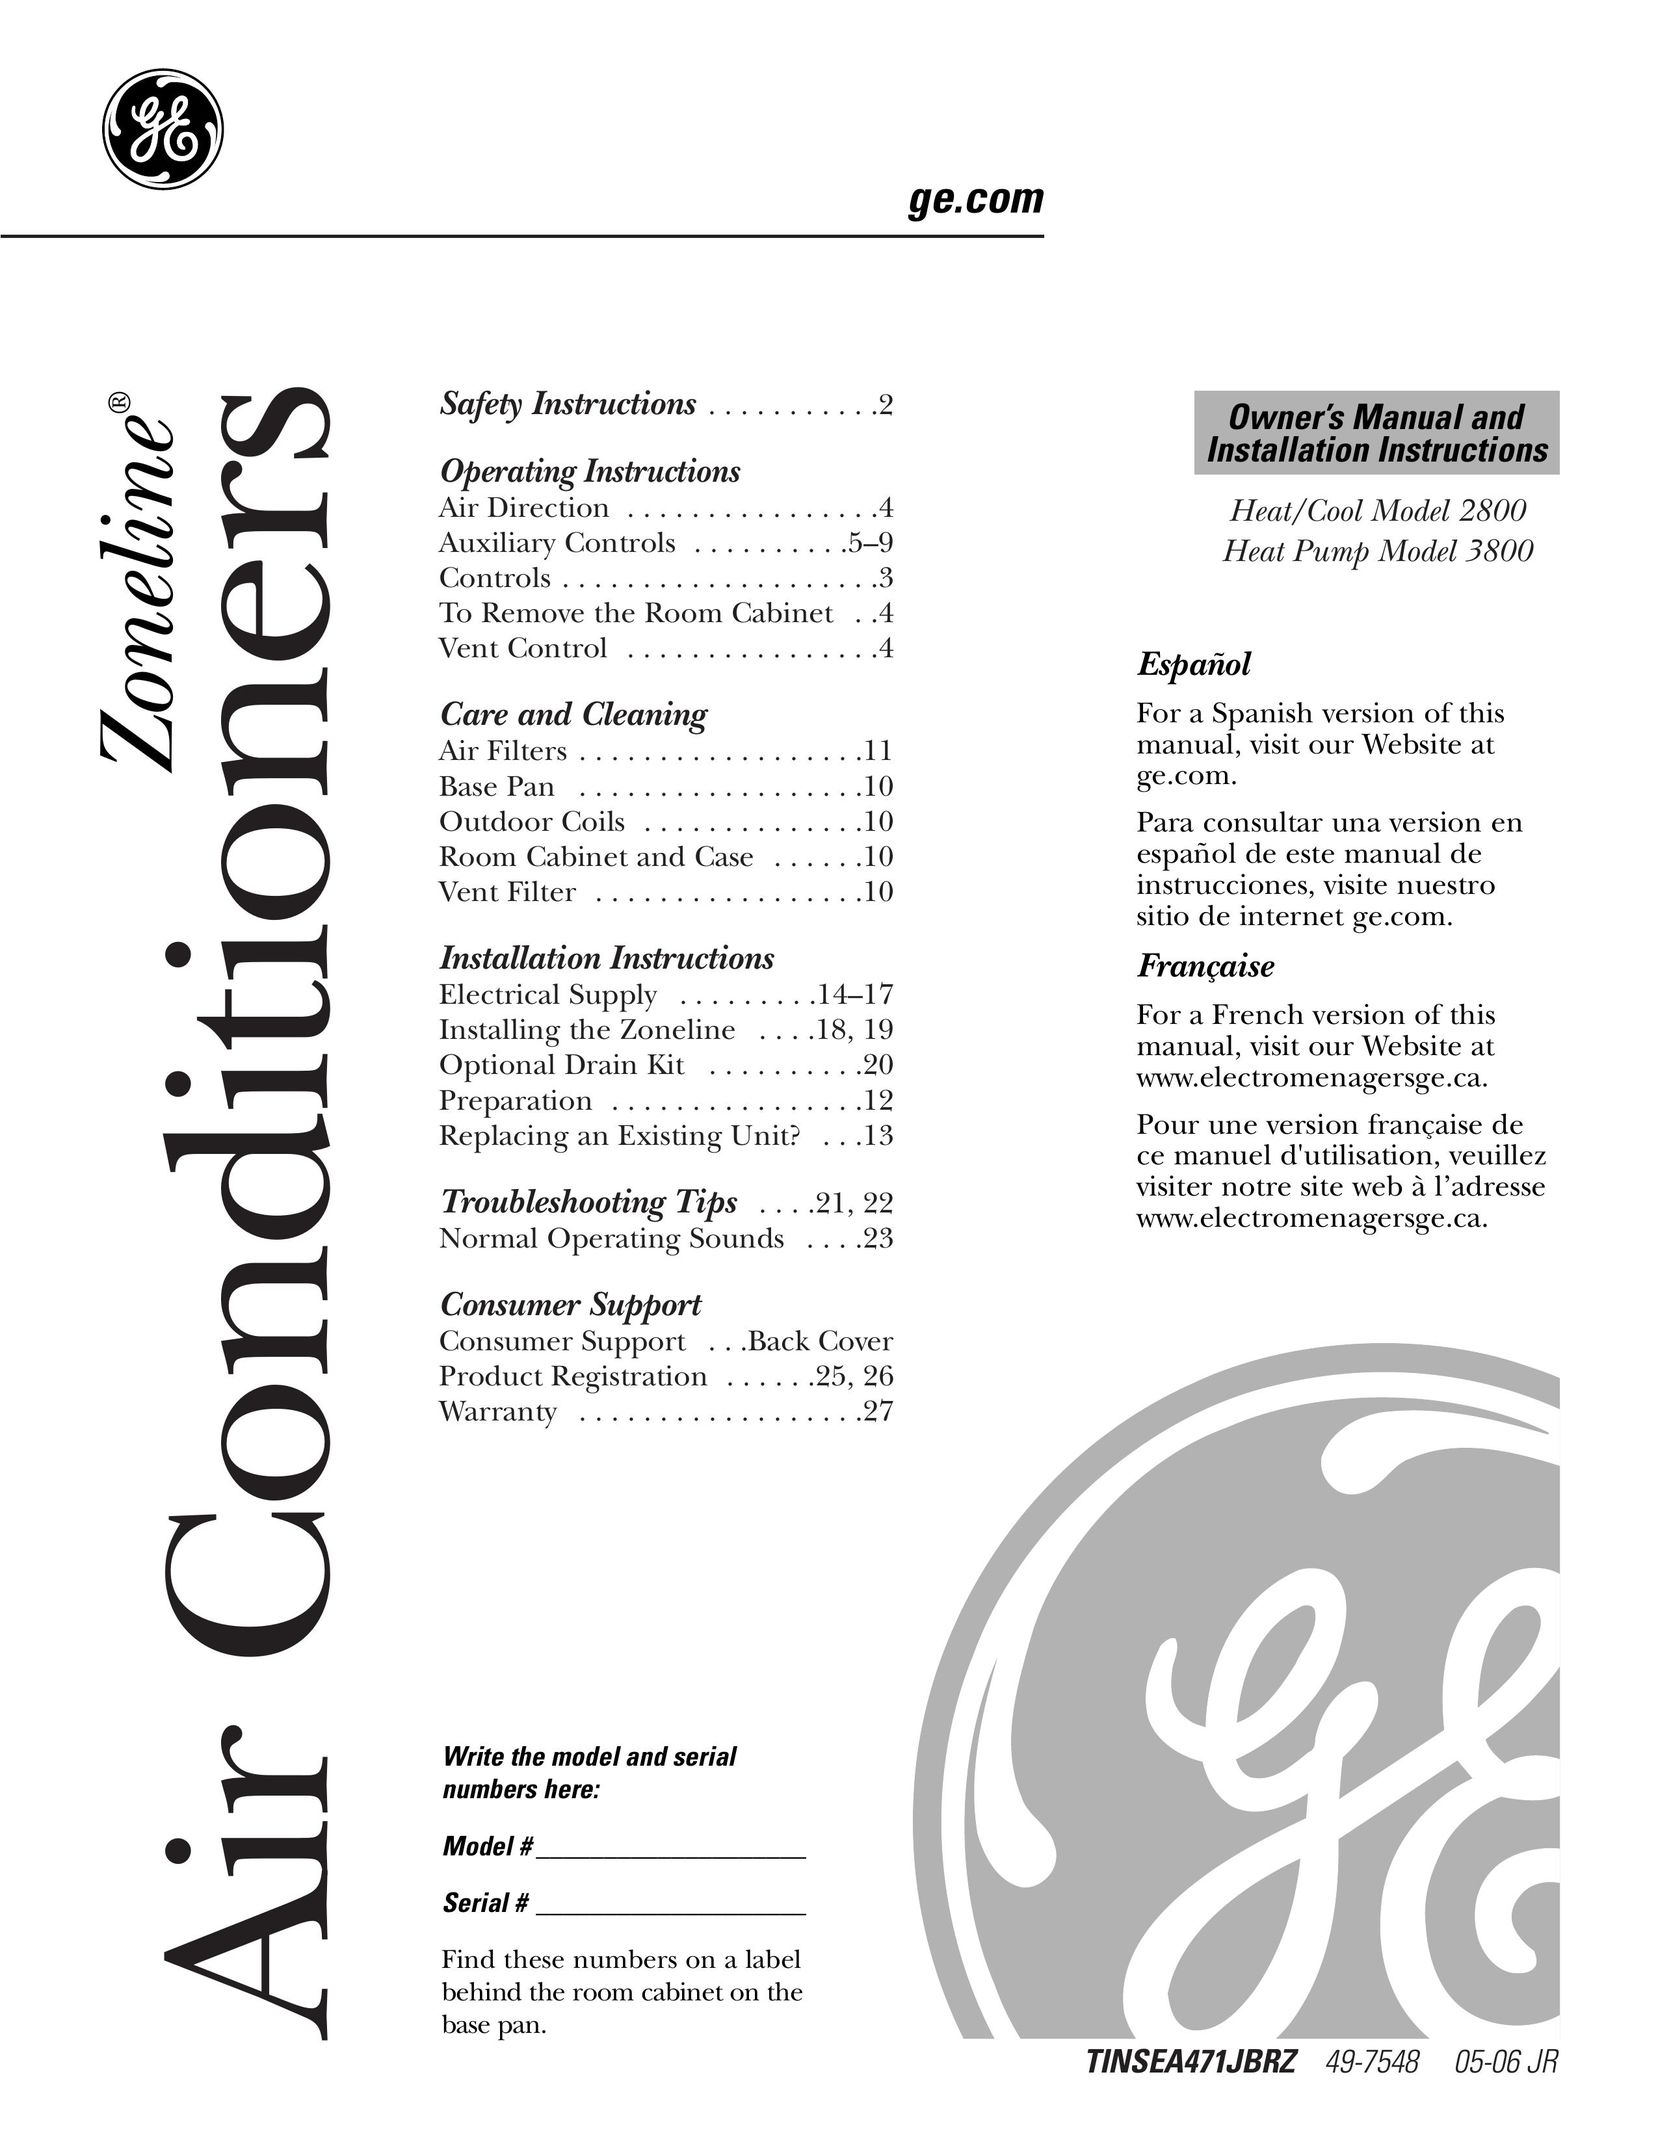 GE 2800 Air Conditioner User Manual